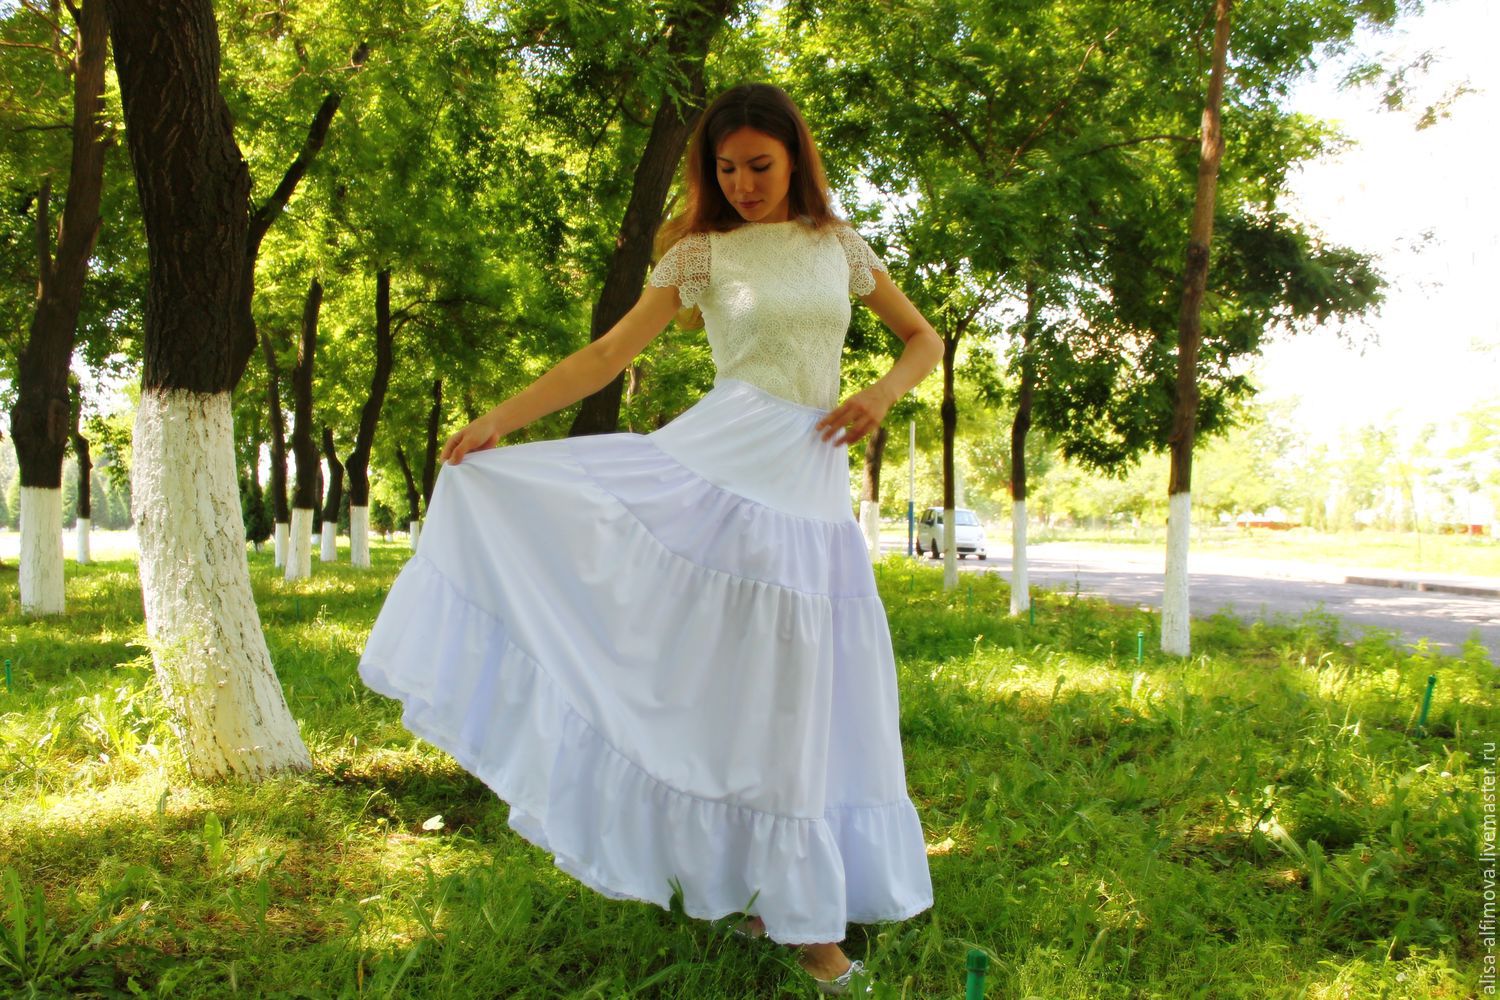 Petticoat (underskirt) moderate, Skirts, Tashkent,  Фото №1